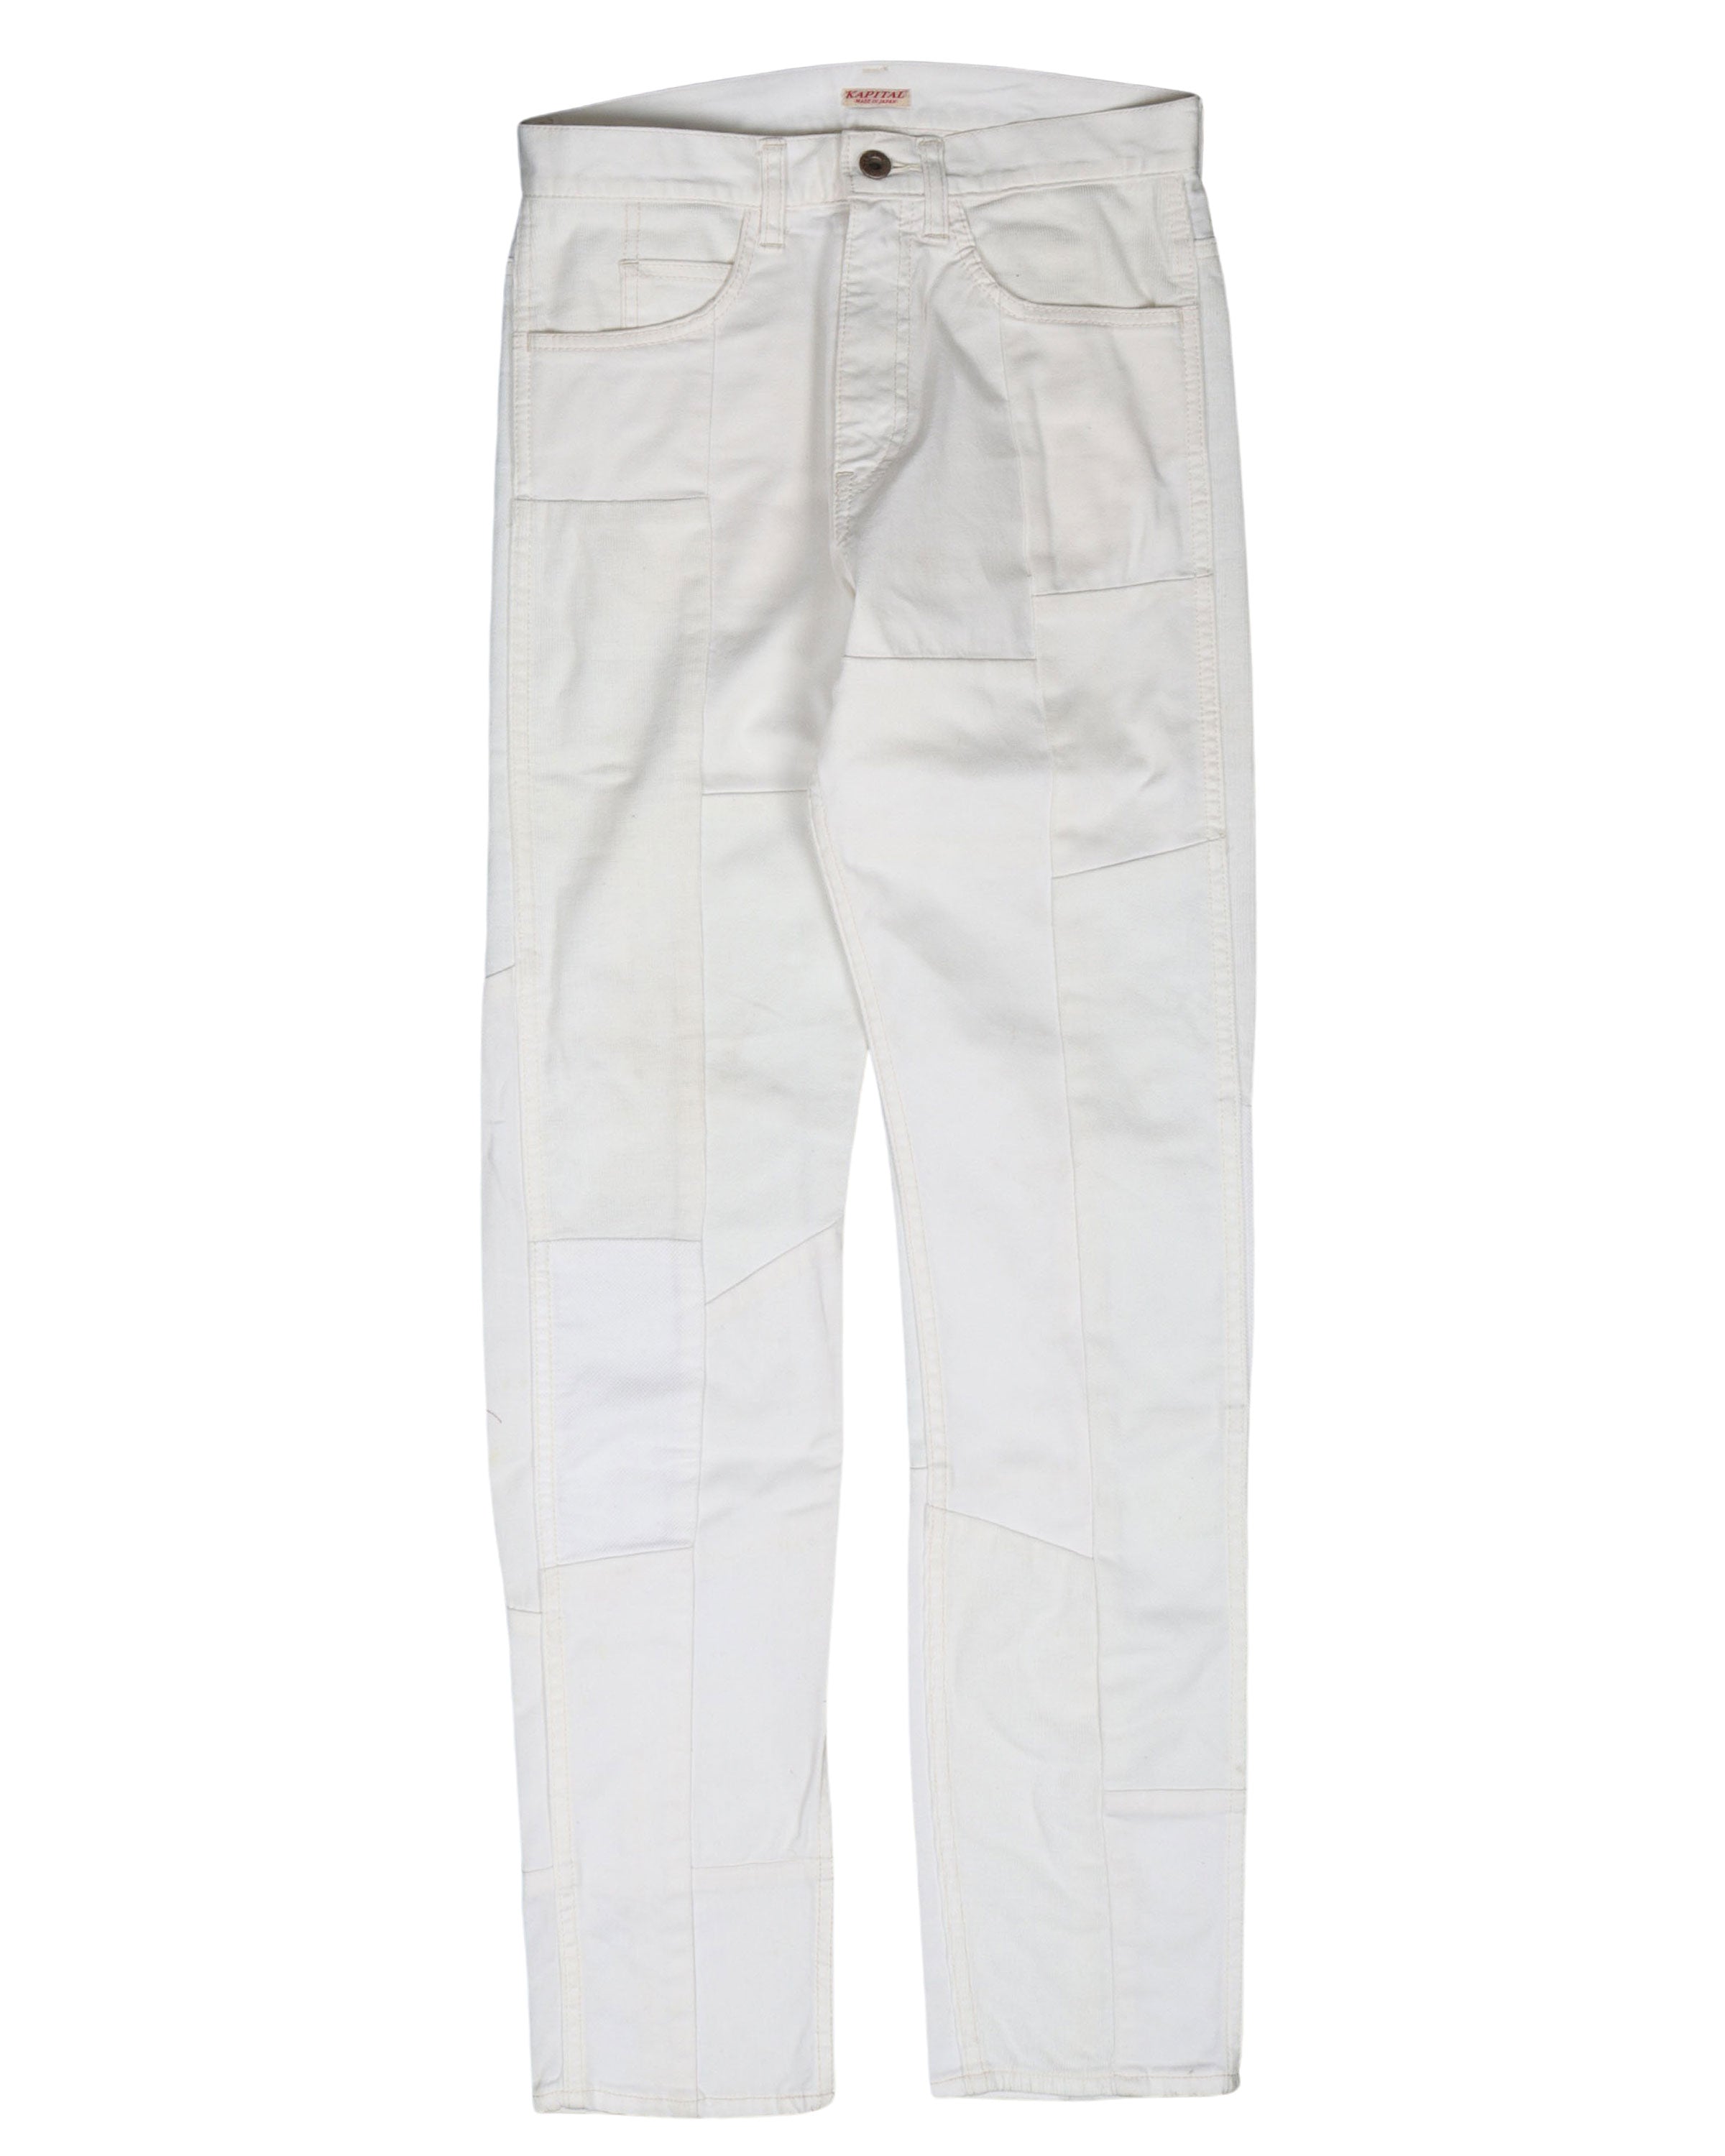 Plain White Jeans